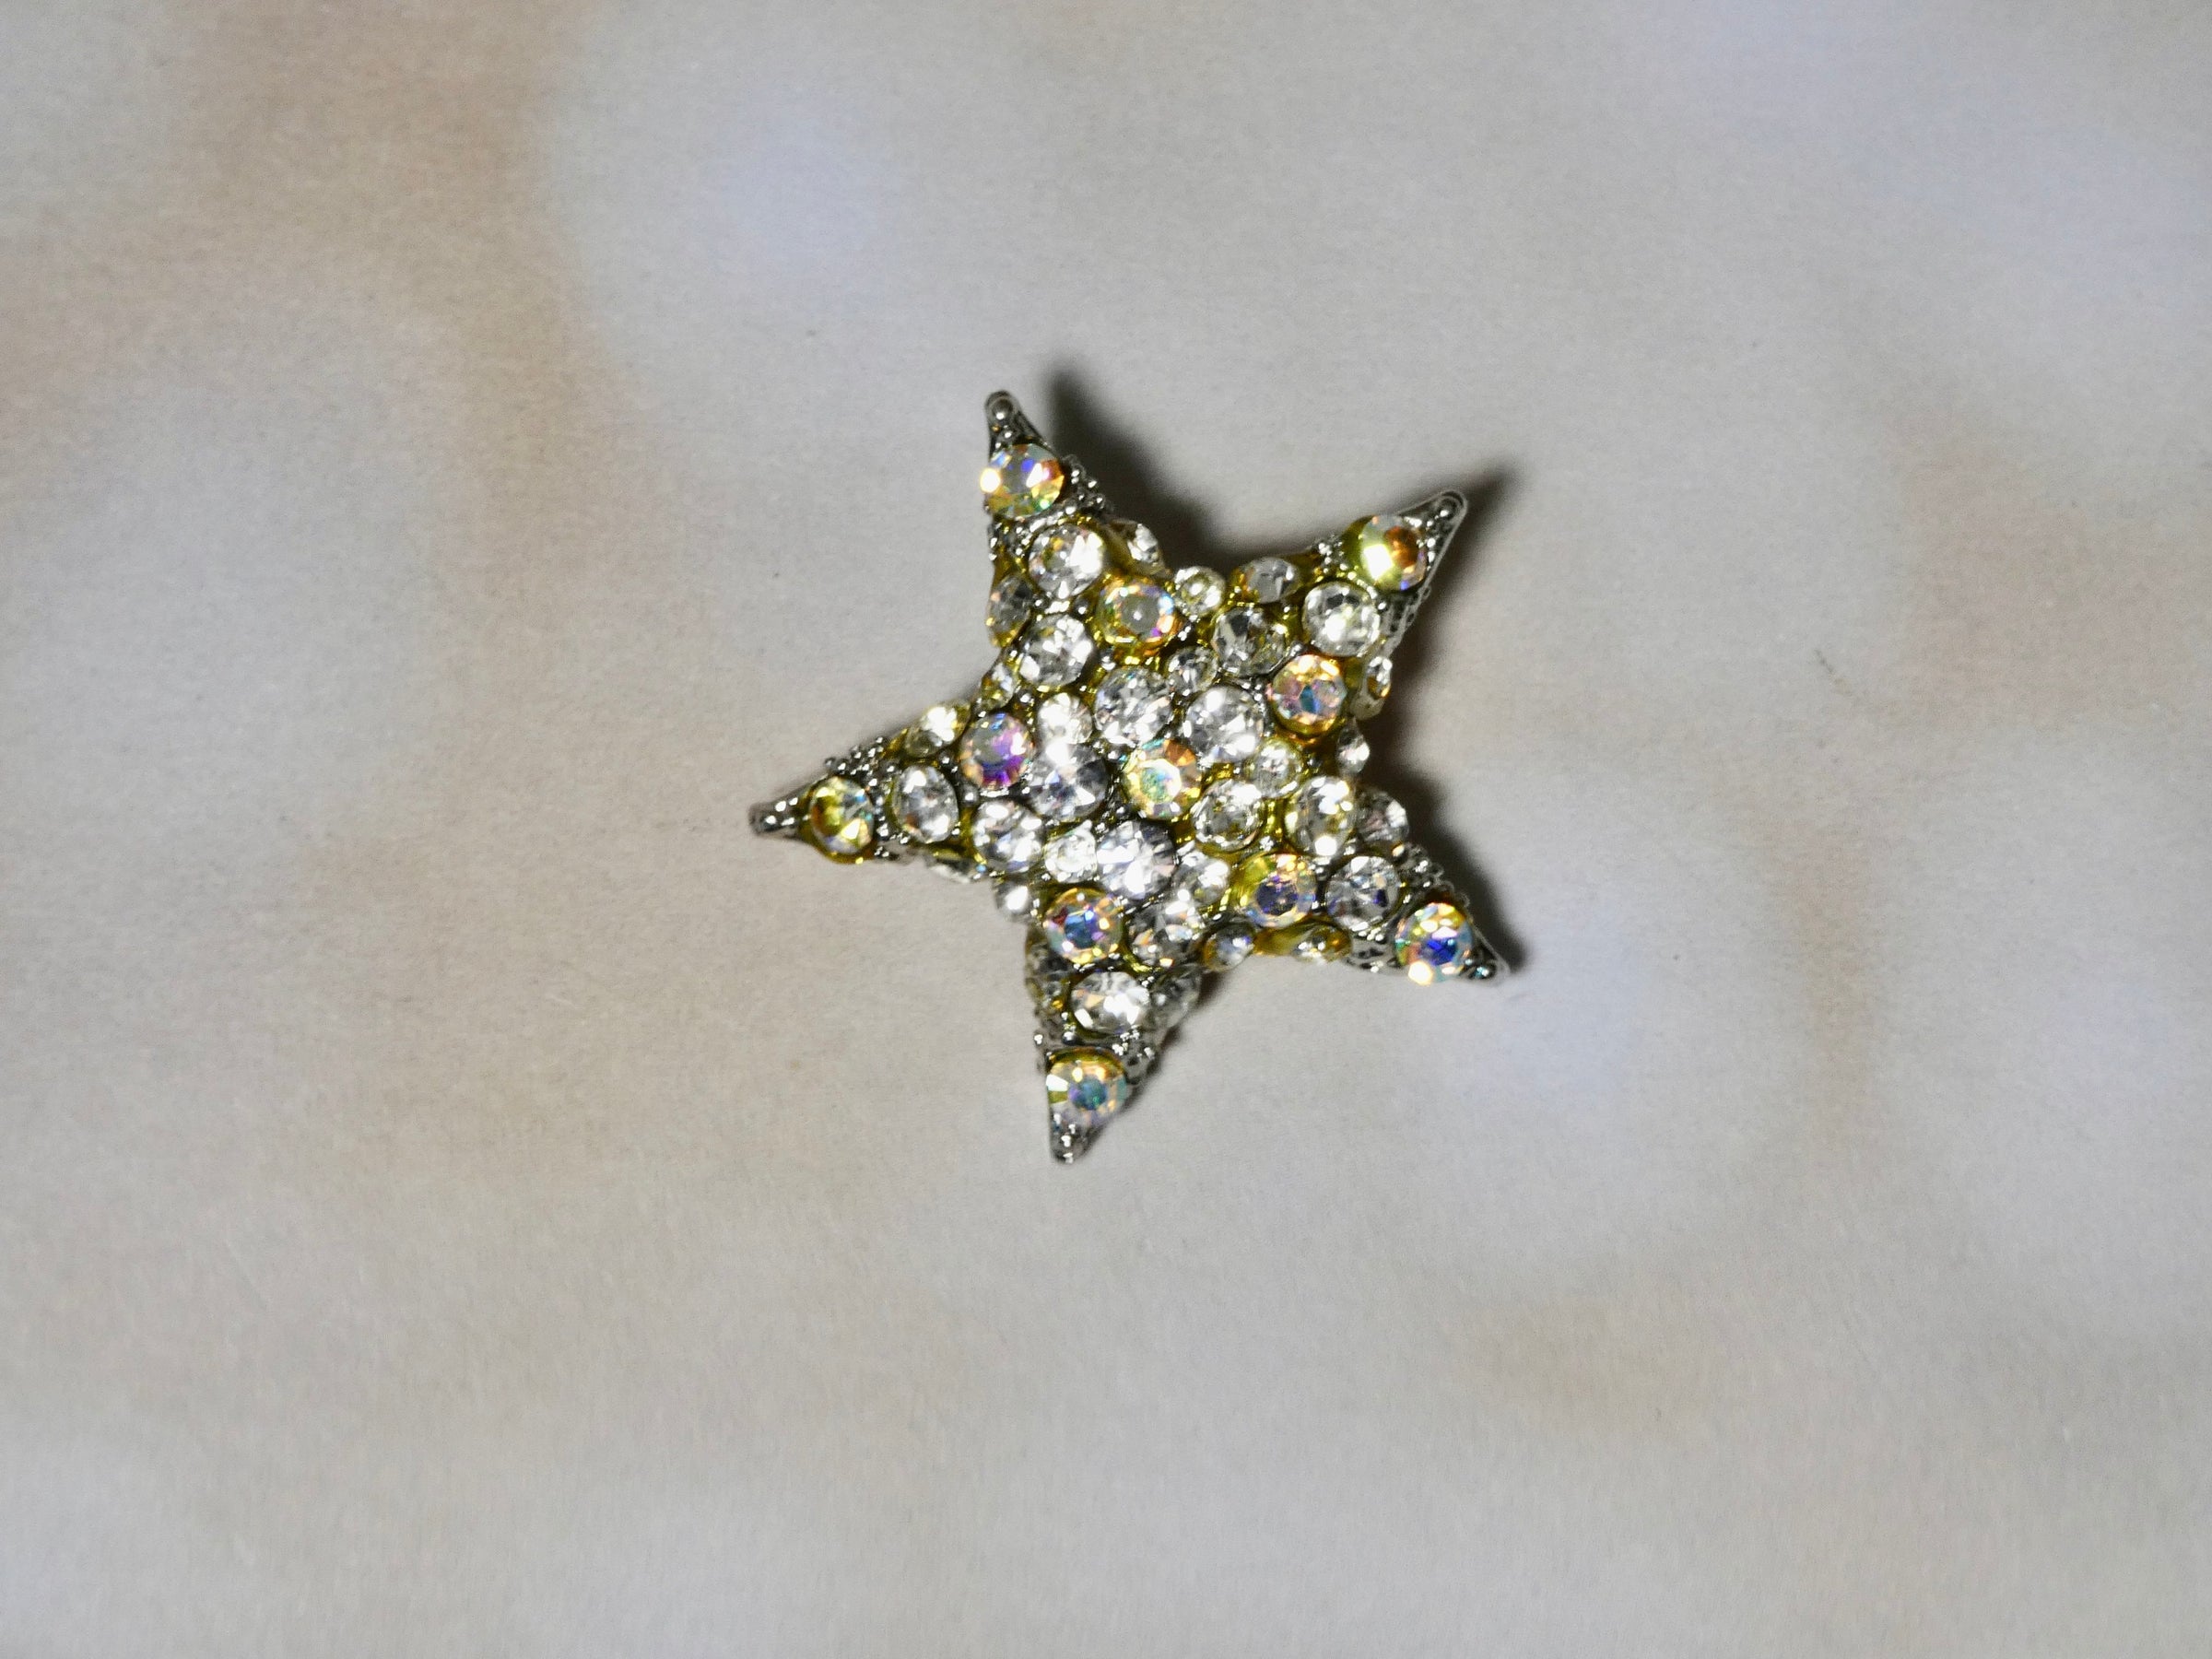 Vintage pave star pin